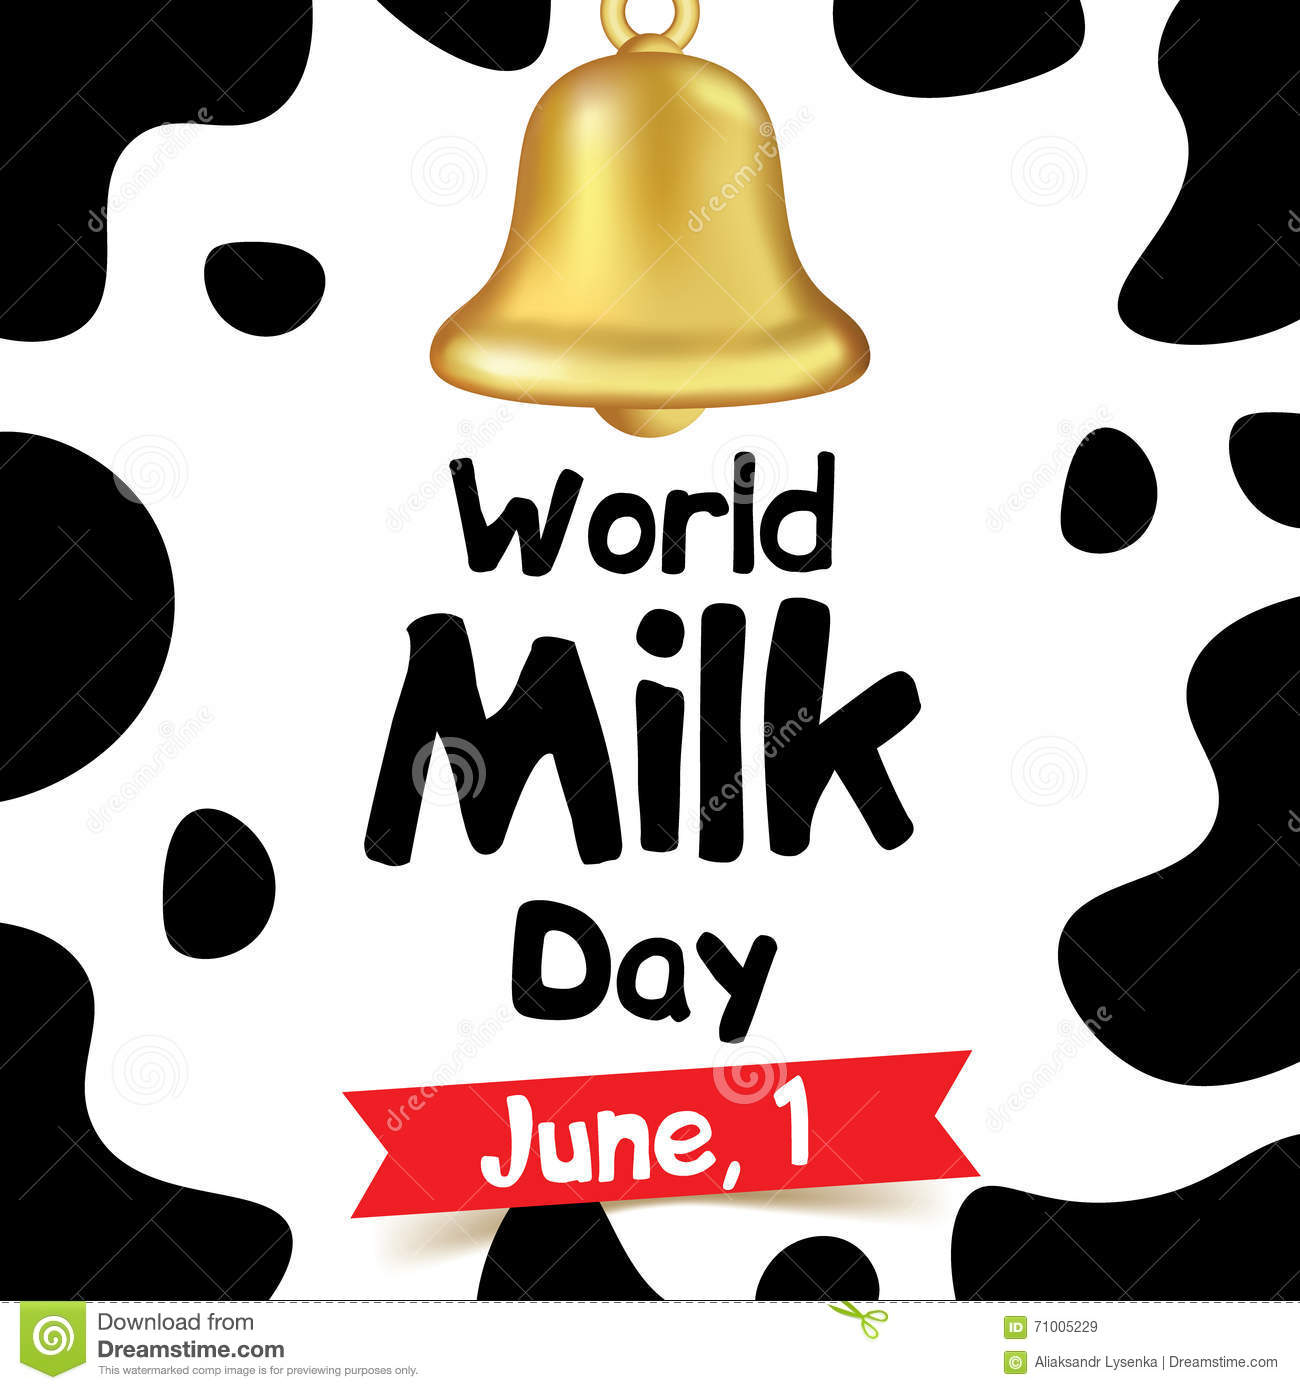 World Milk Day June 1 Graphic